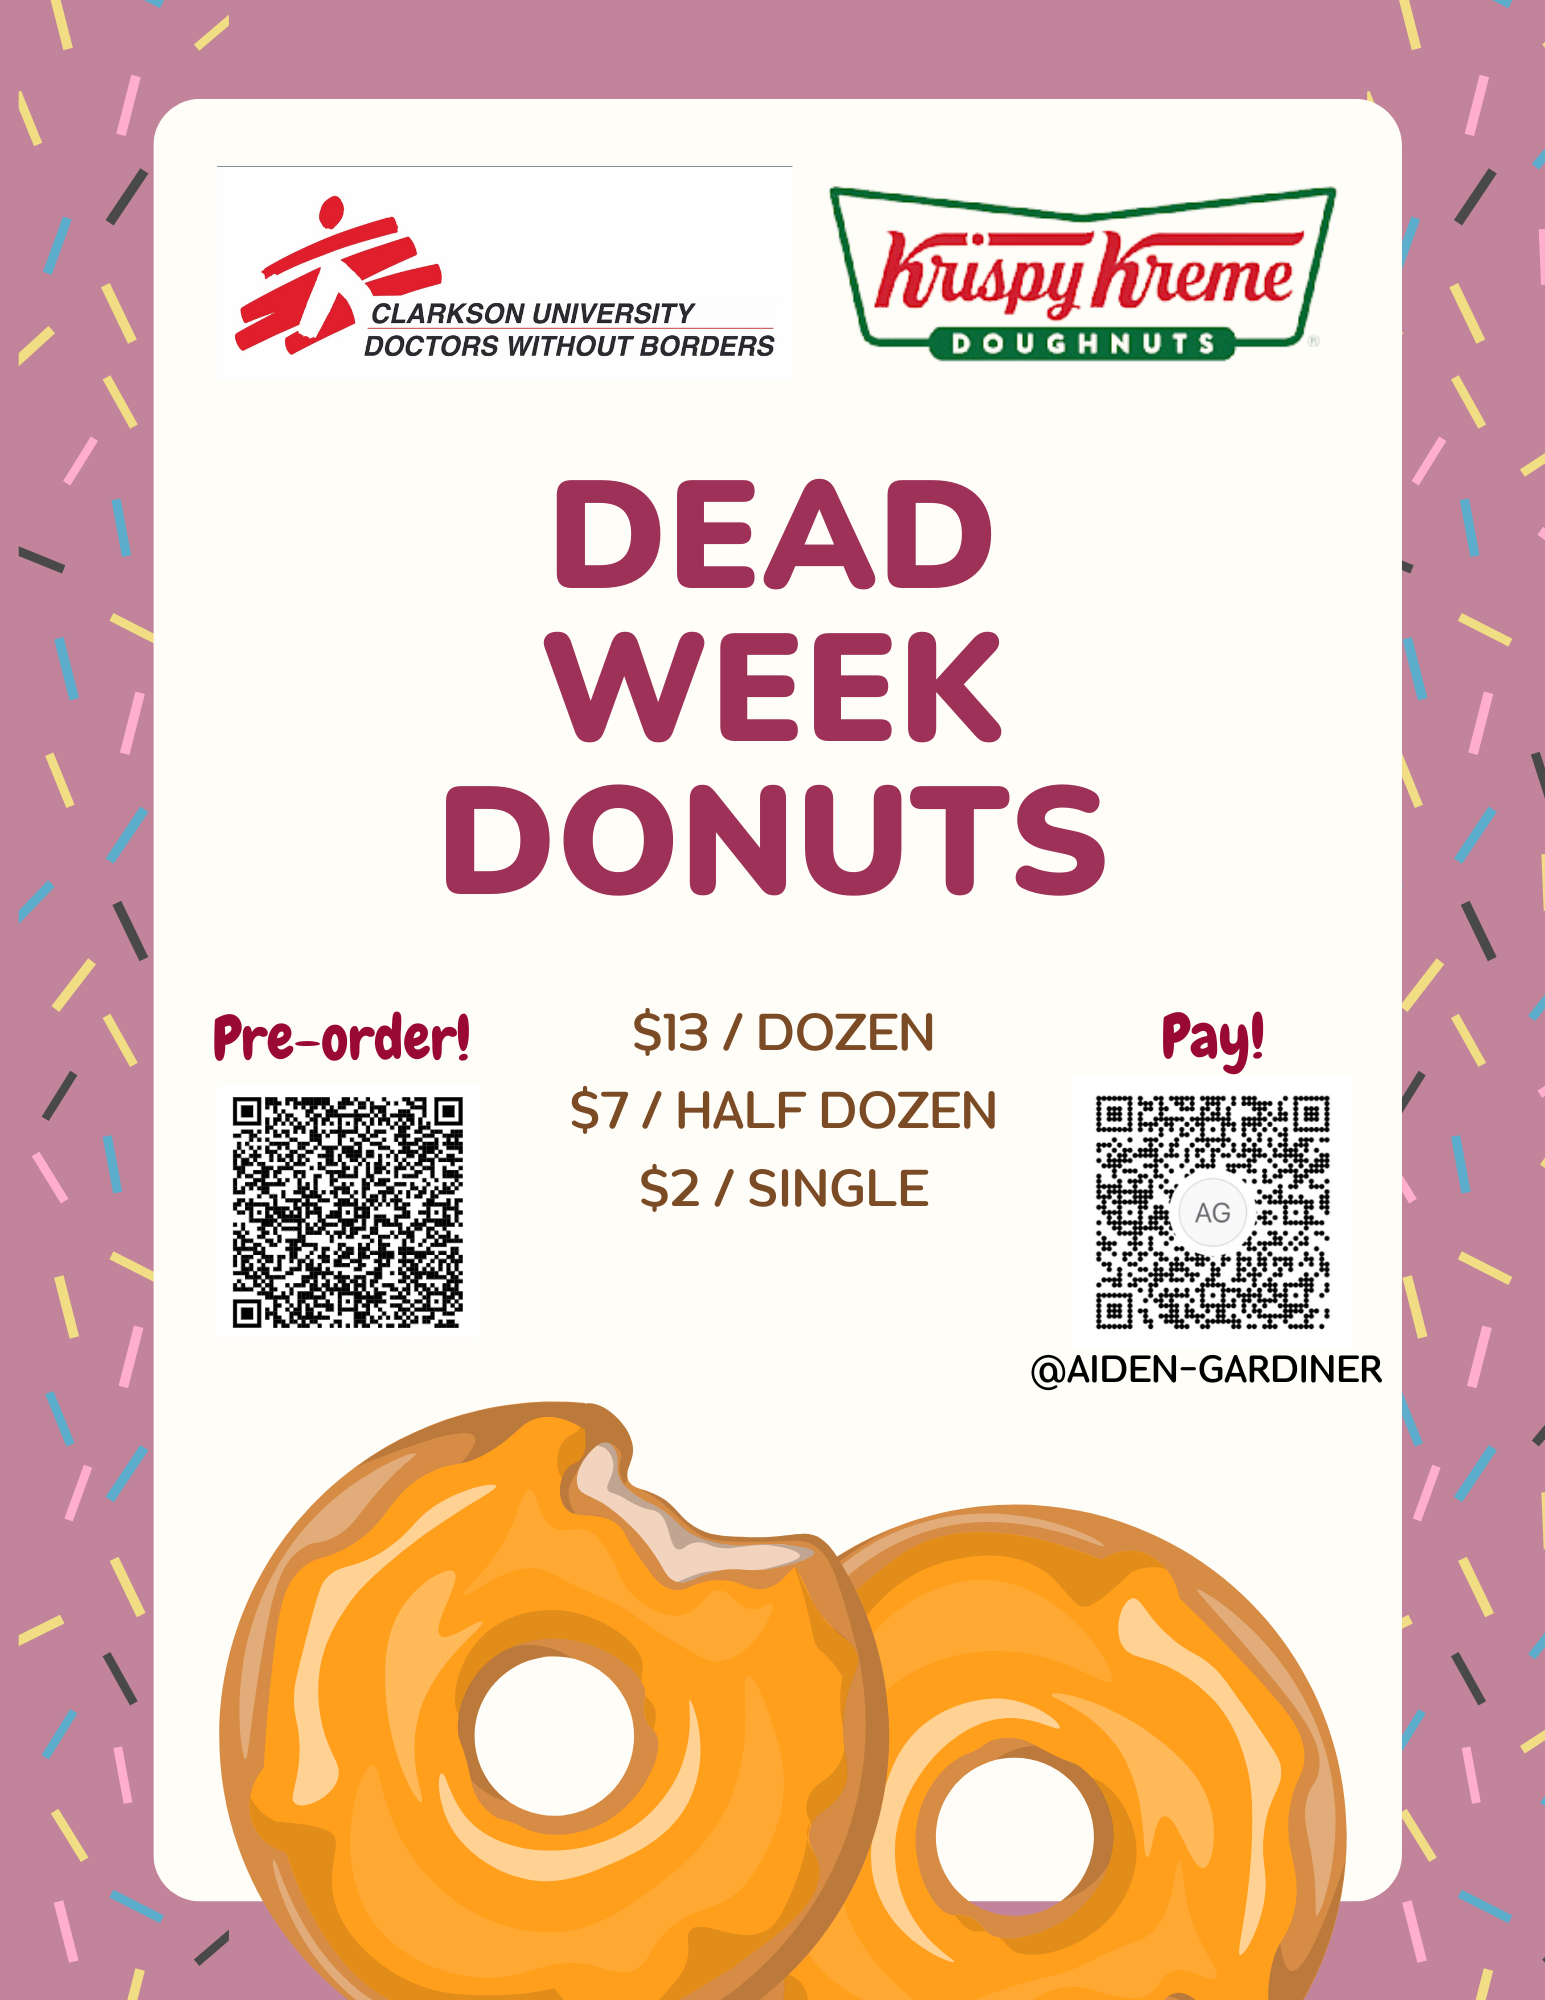 Doctors Without Borders is hosting a Krispy Kreme fundraiser!